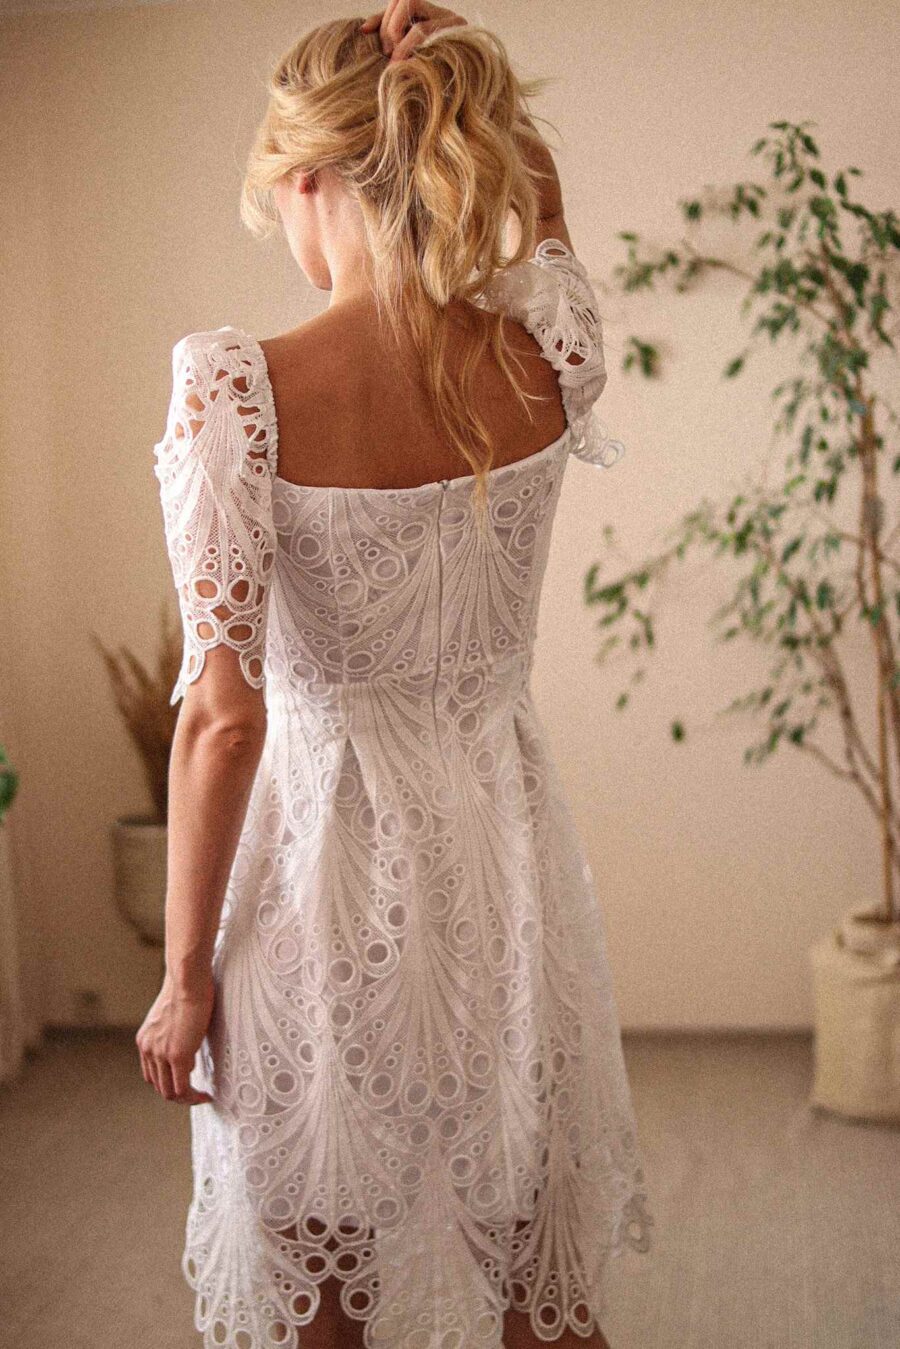 Betonica Hirsuta - biała, giupiurowa sukienka